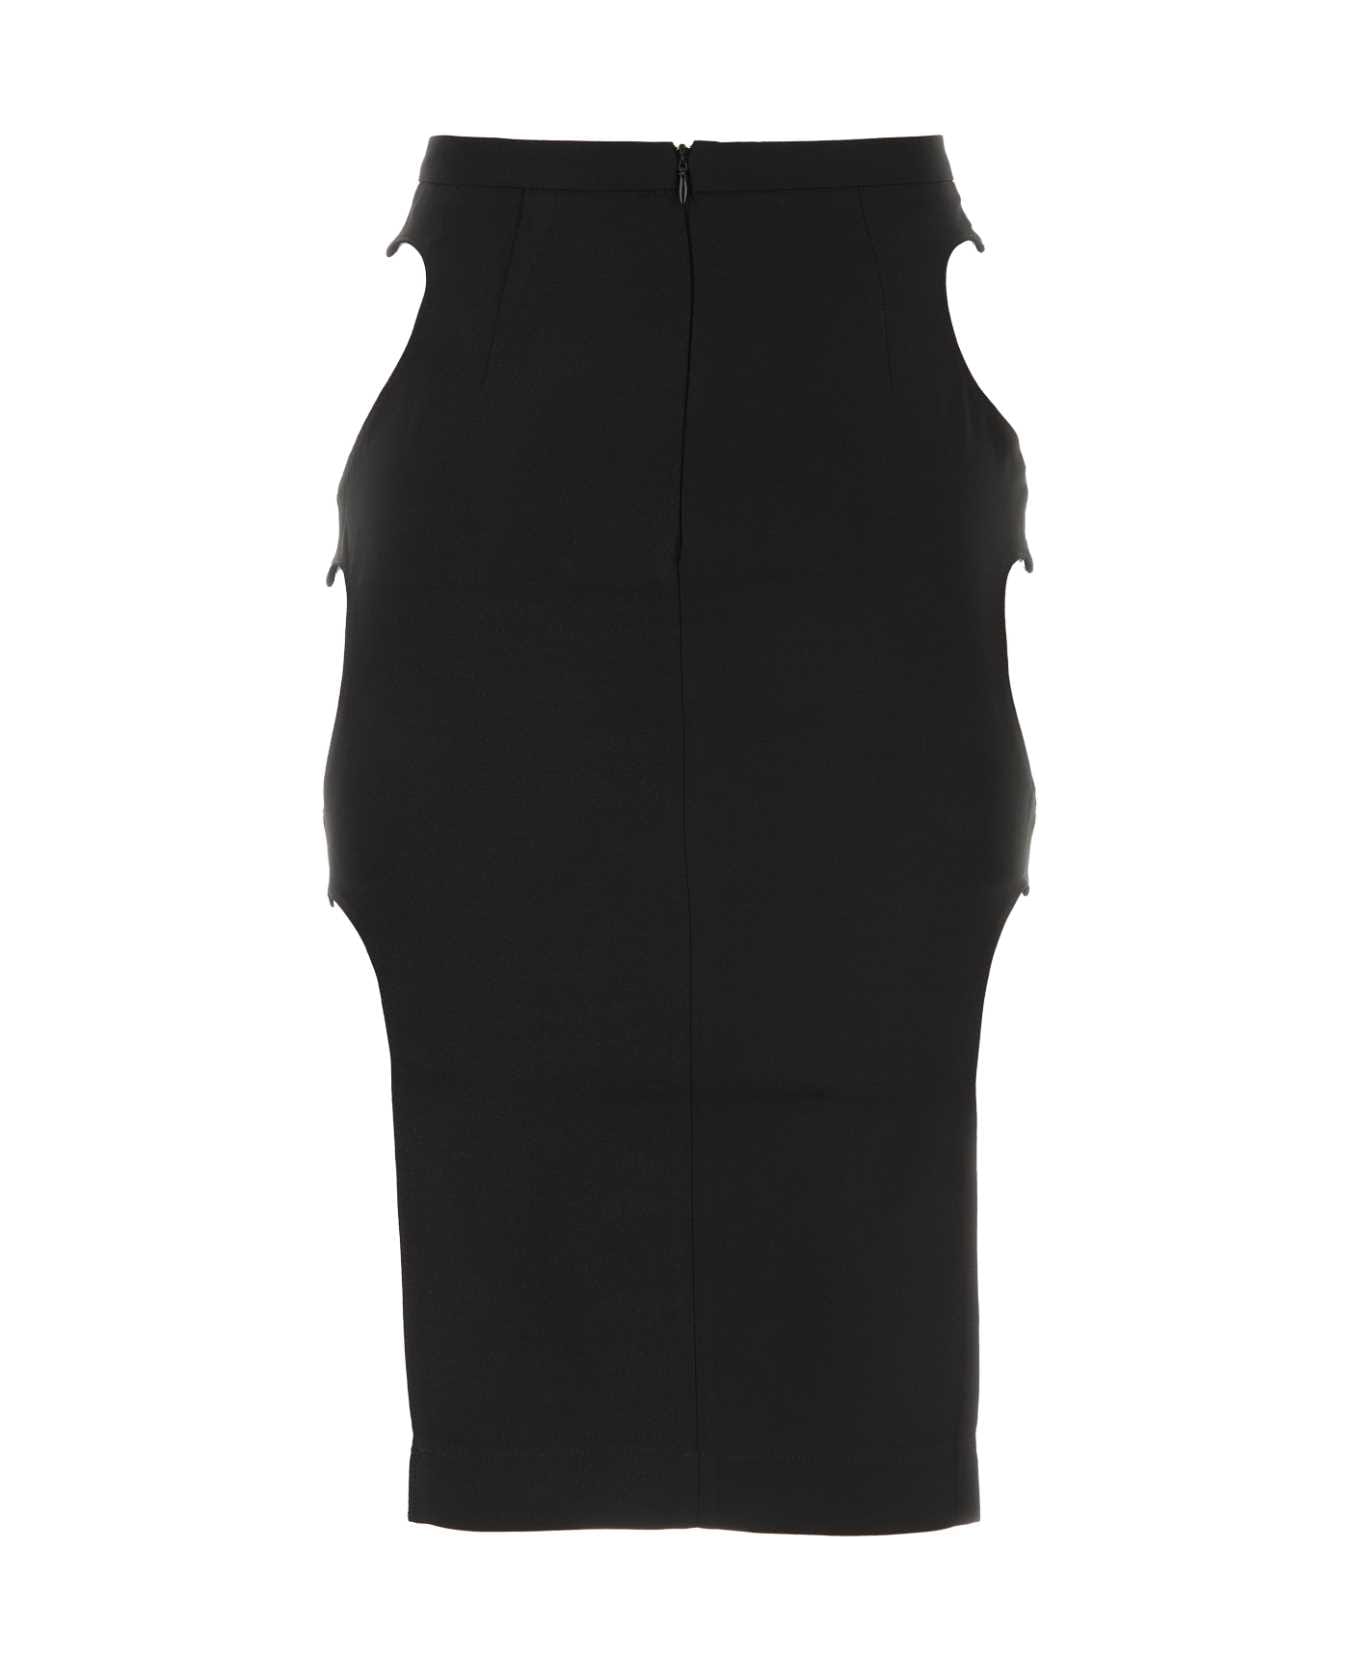 Marco Rambaldi Black Stretch Viscose Skirt - BLACK スカート